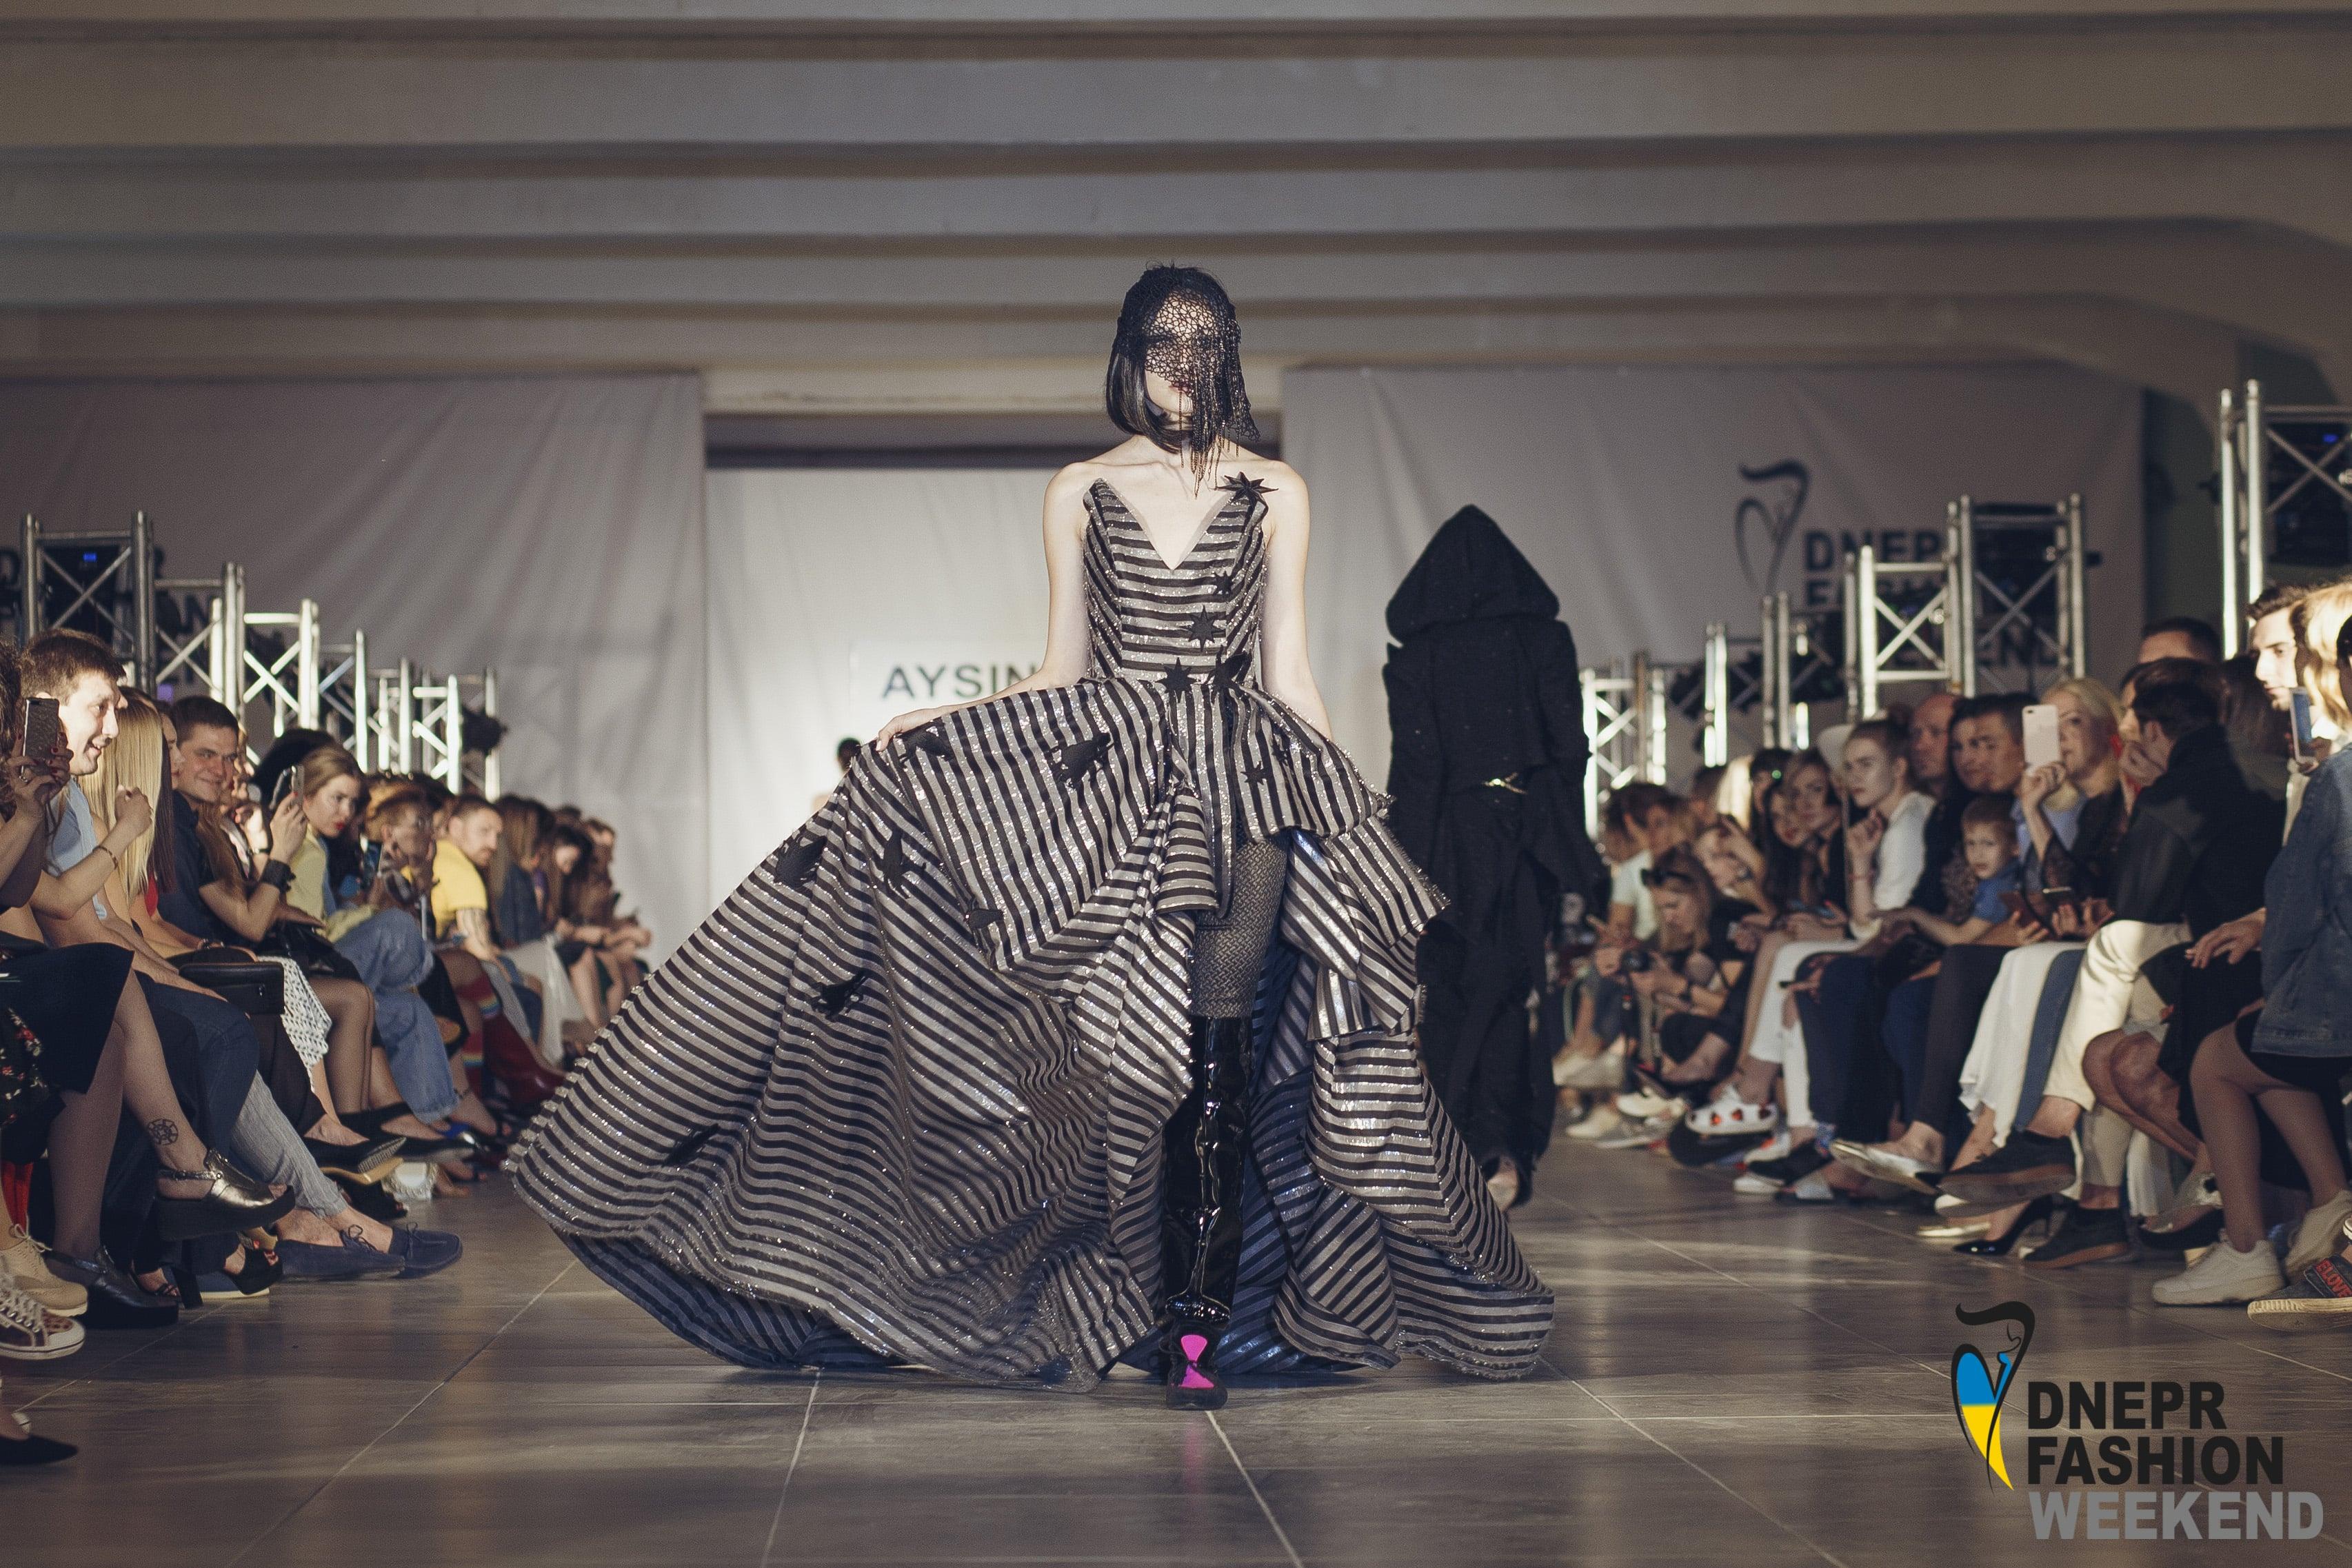 Хроники Dnepr Fashion Weekend как прошли три дня модного мероприятия 9